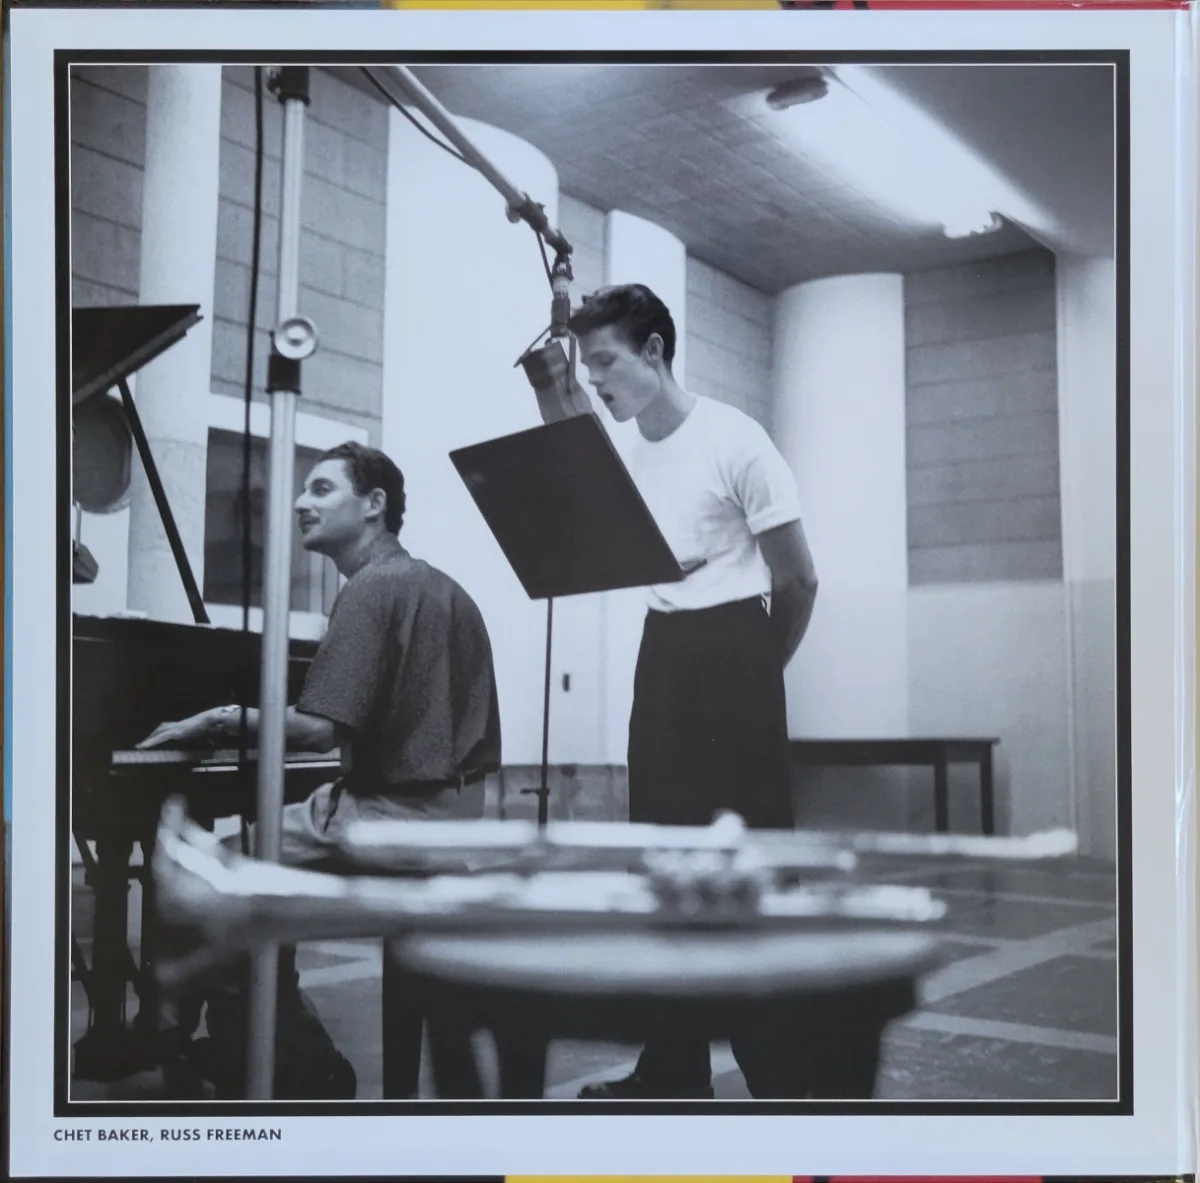 B&W photo of Chet Baker singing in studio